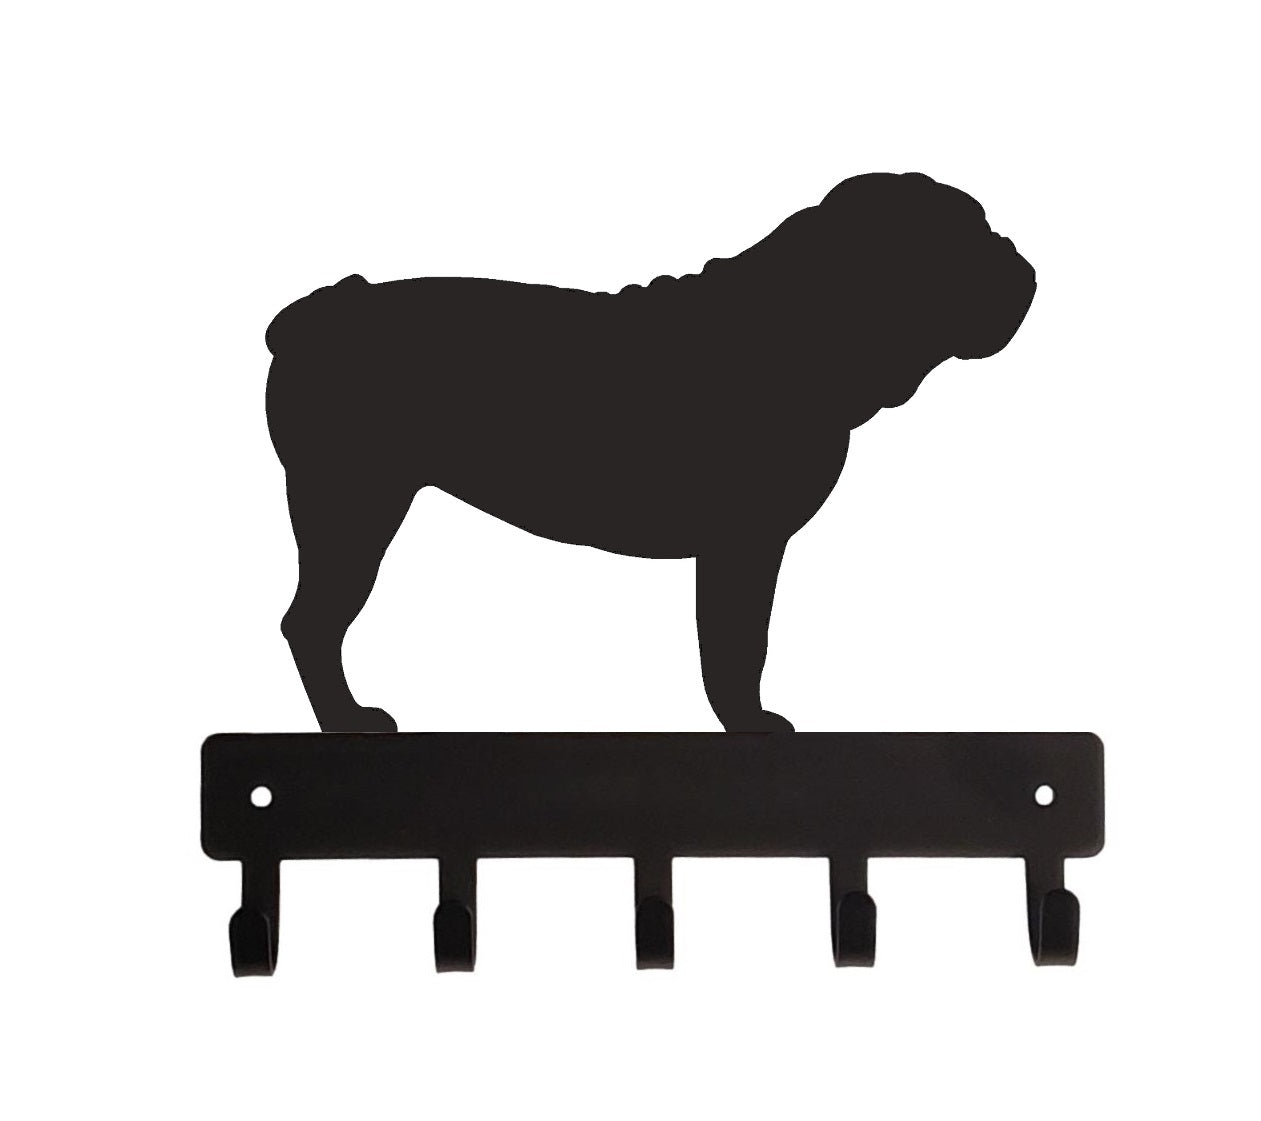 English Bulldog Dog Key Rack/ Leash Hanger - The Metal Peddler Key Rack breed, Breed B, Breed E, Bulldog, Dog, English Bulldog, key rack, leash hanger